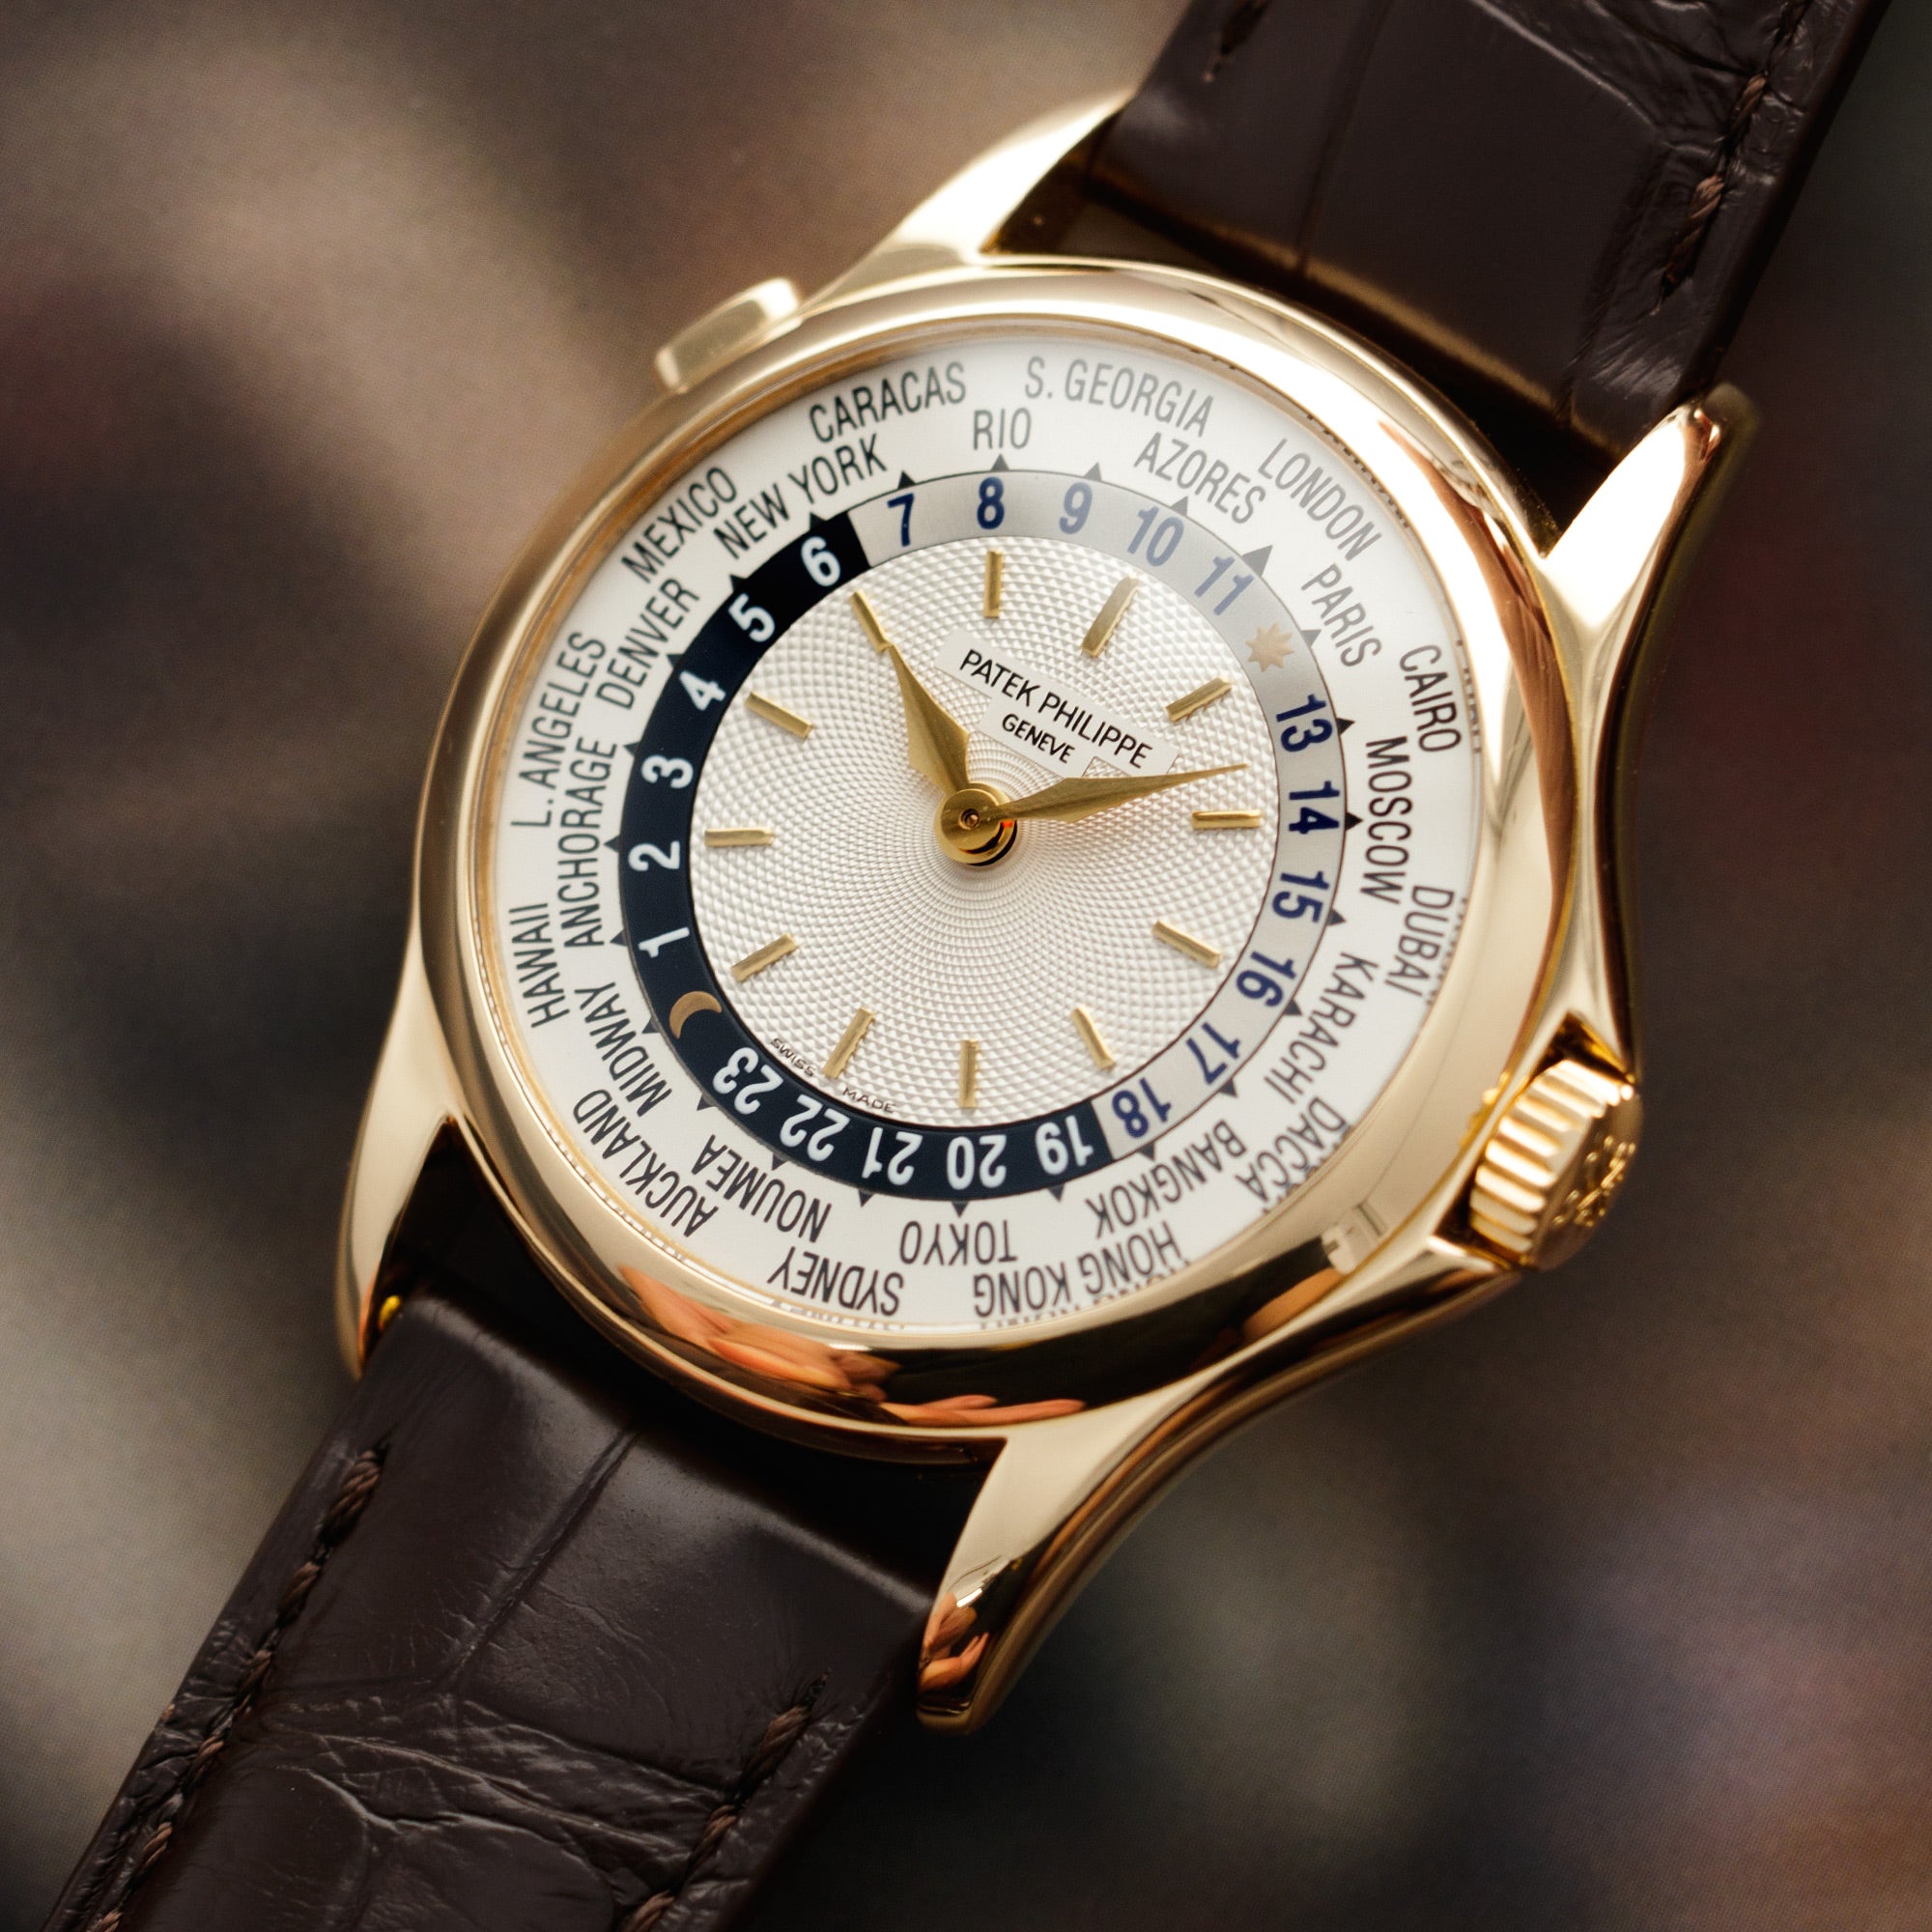 Patek Philippe - Patek Philippe Yellow Gold World Time Watch Ref. 5110 - The Keystone Watches